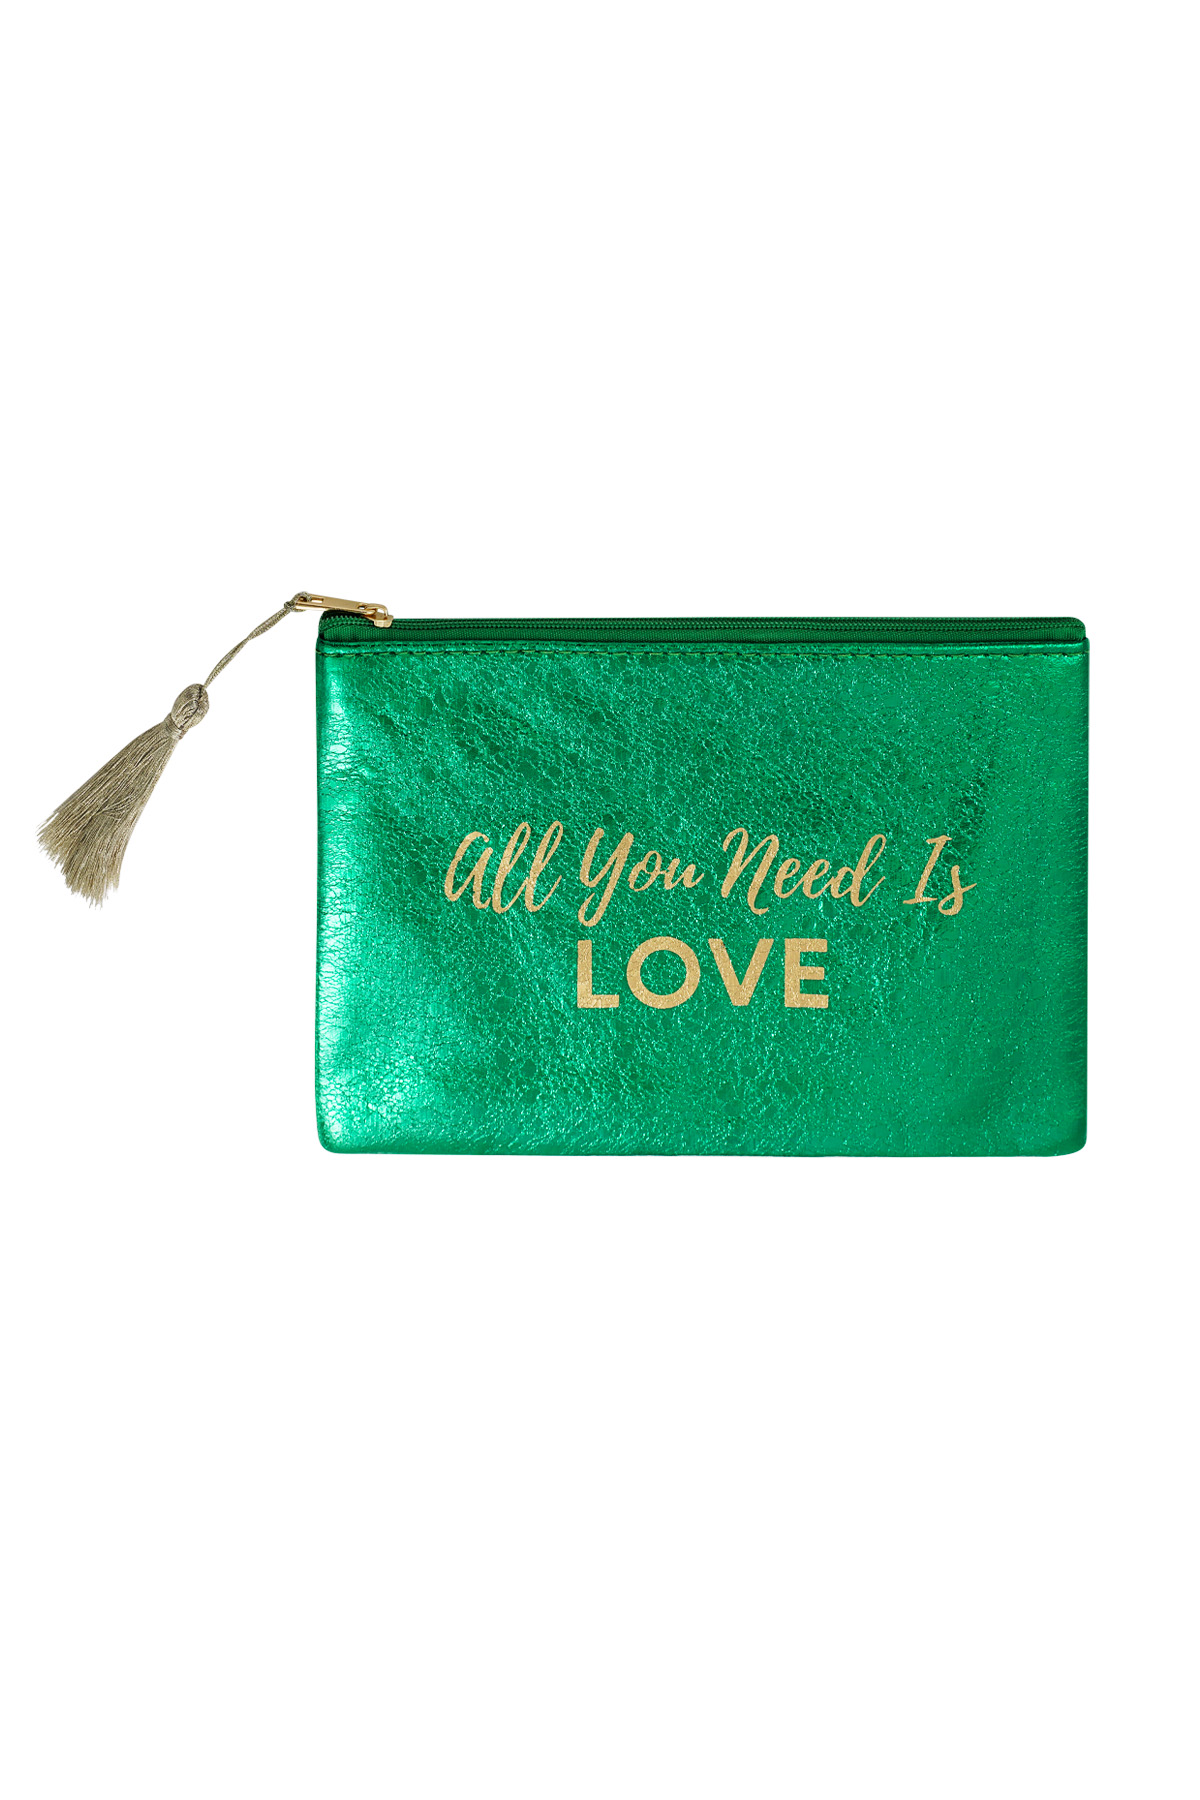 Make-up bag metallic all you need is love - green